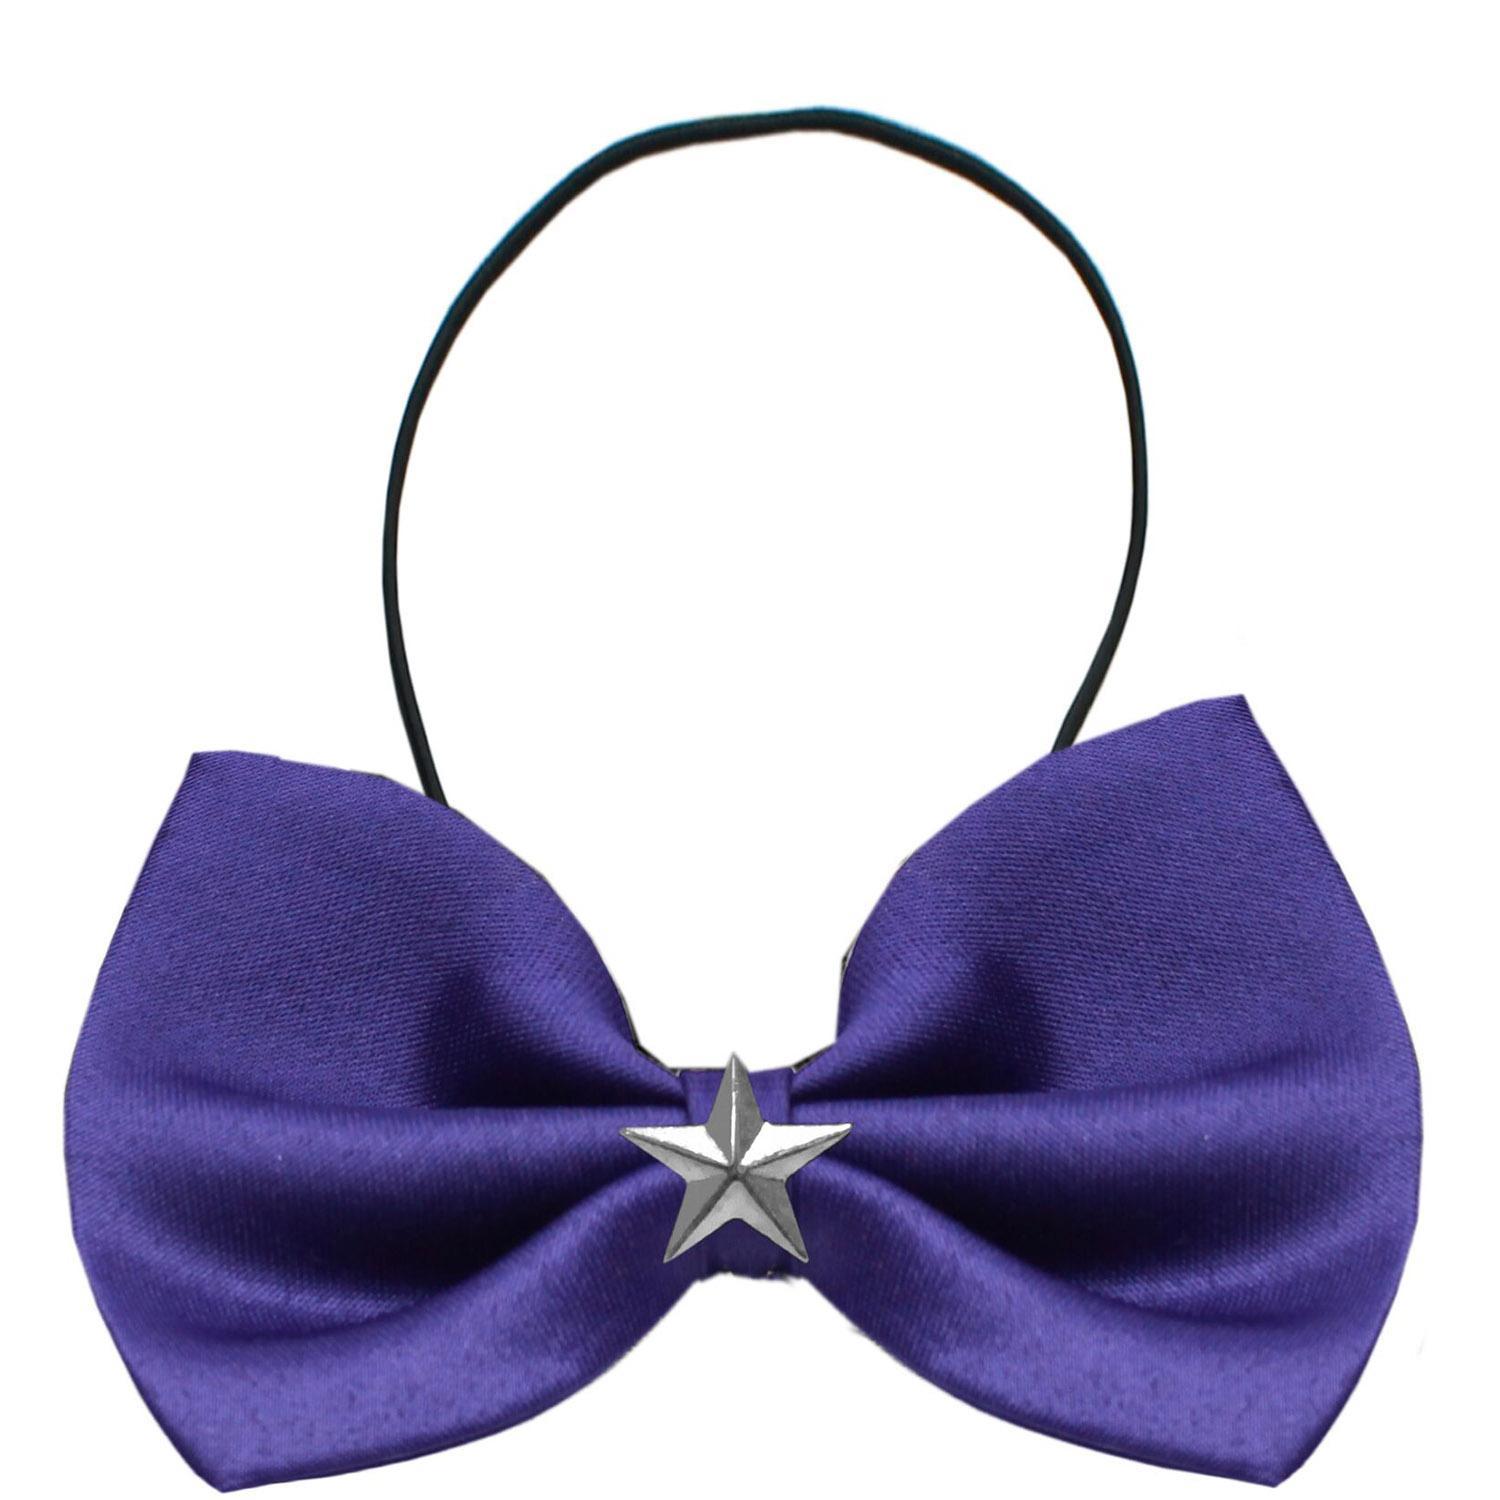 Silver Star Widget Dog Bow Tie - Purple